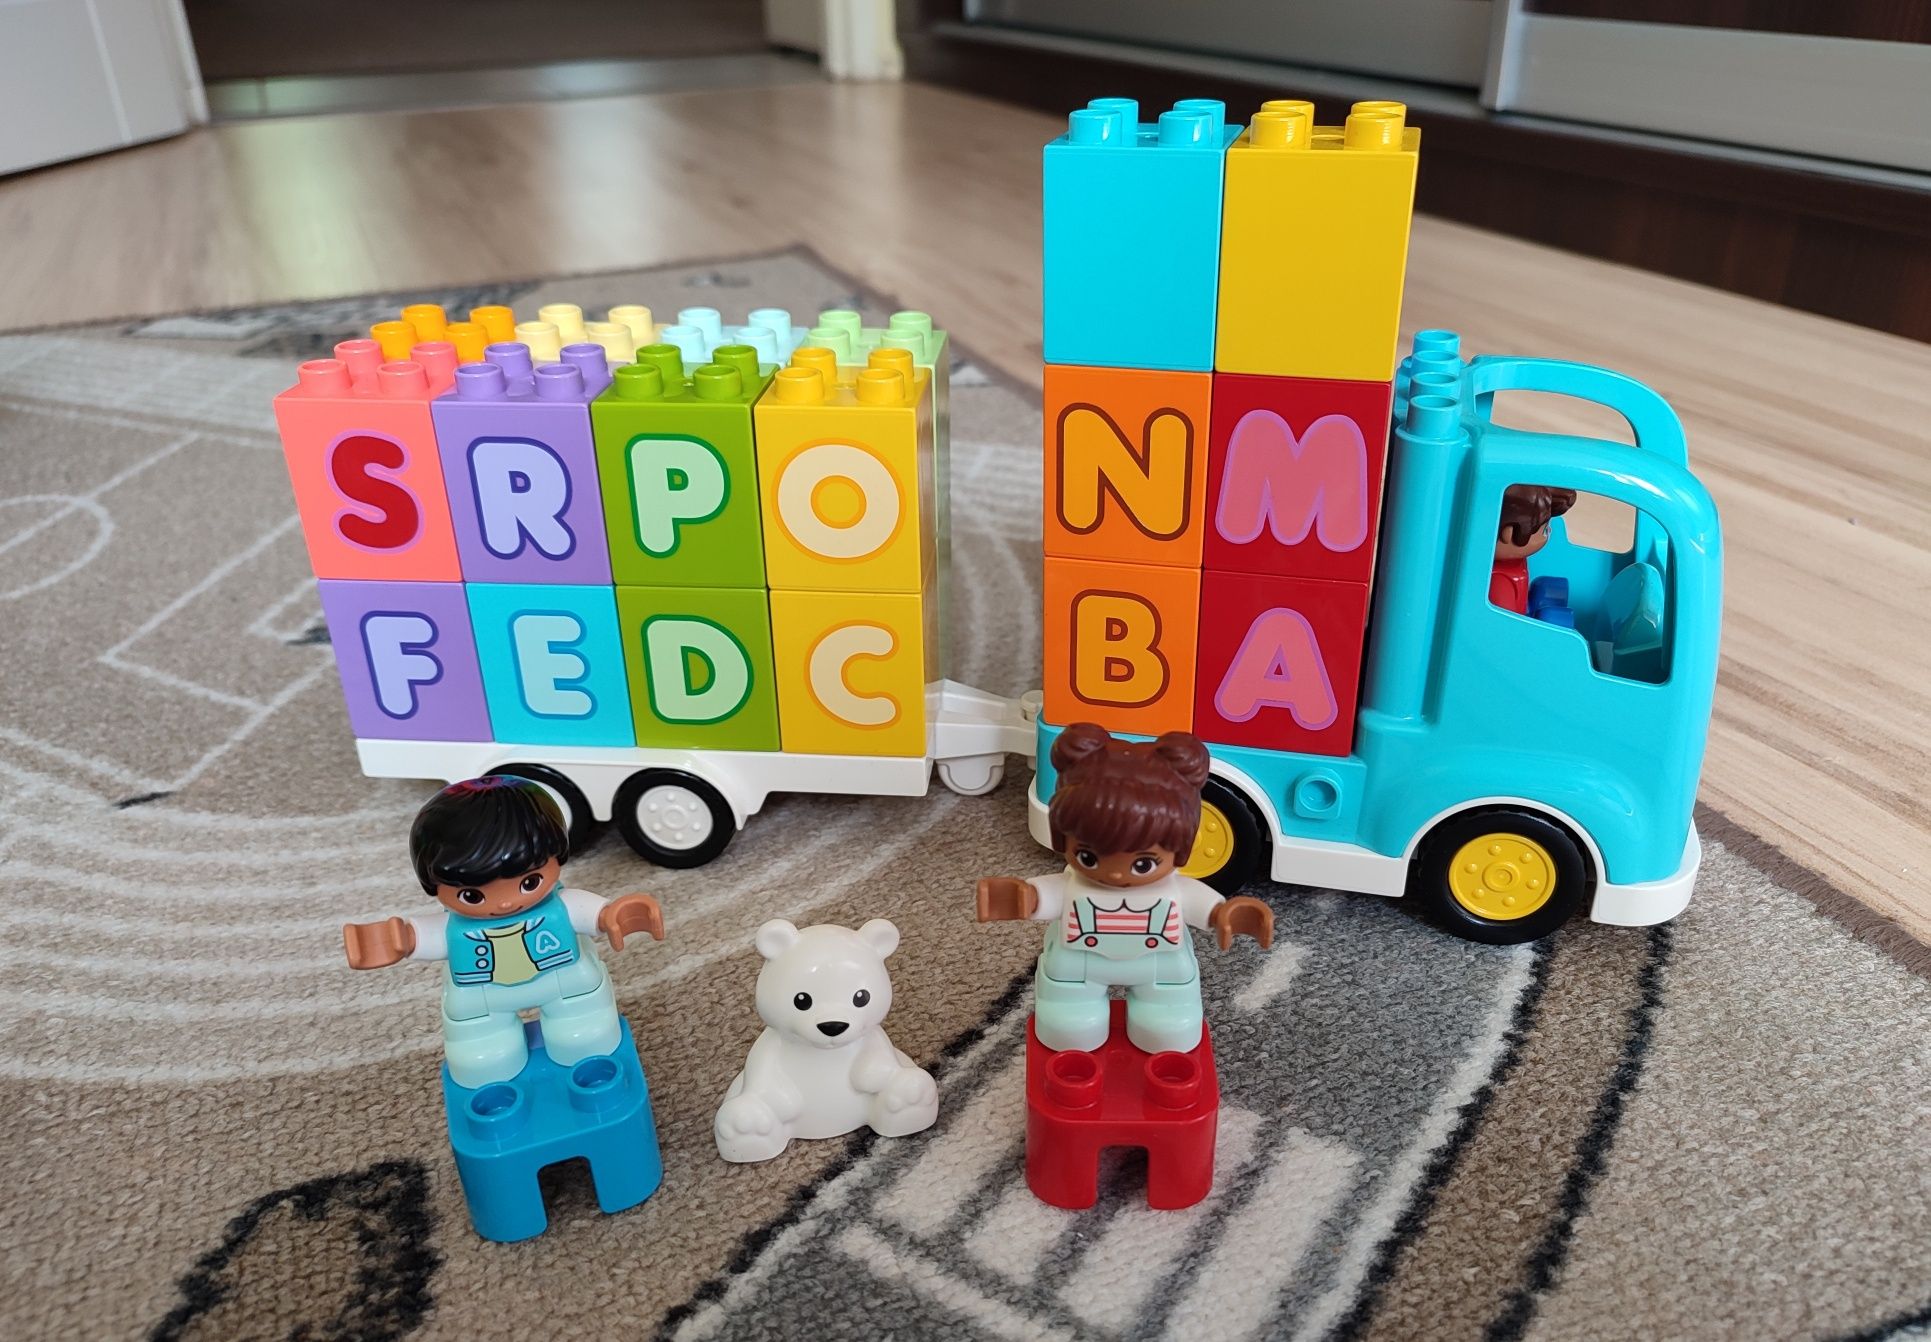 LEGO Duplo ciężarówka, wóz strażacki, łódź podwodna, dodatkowe klocki